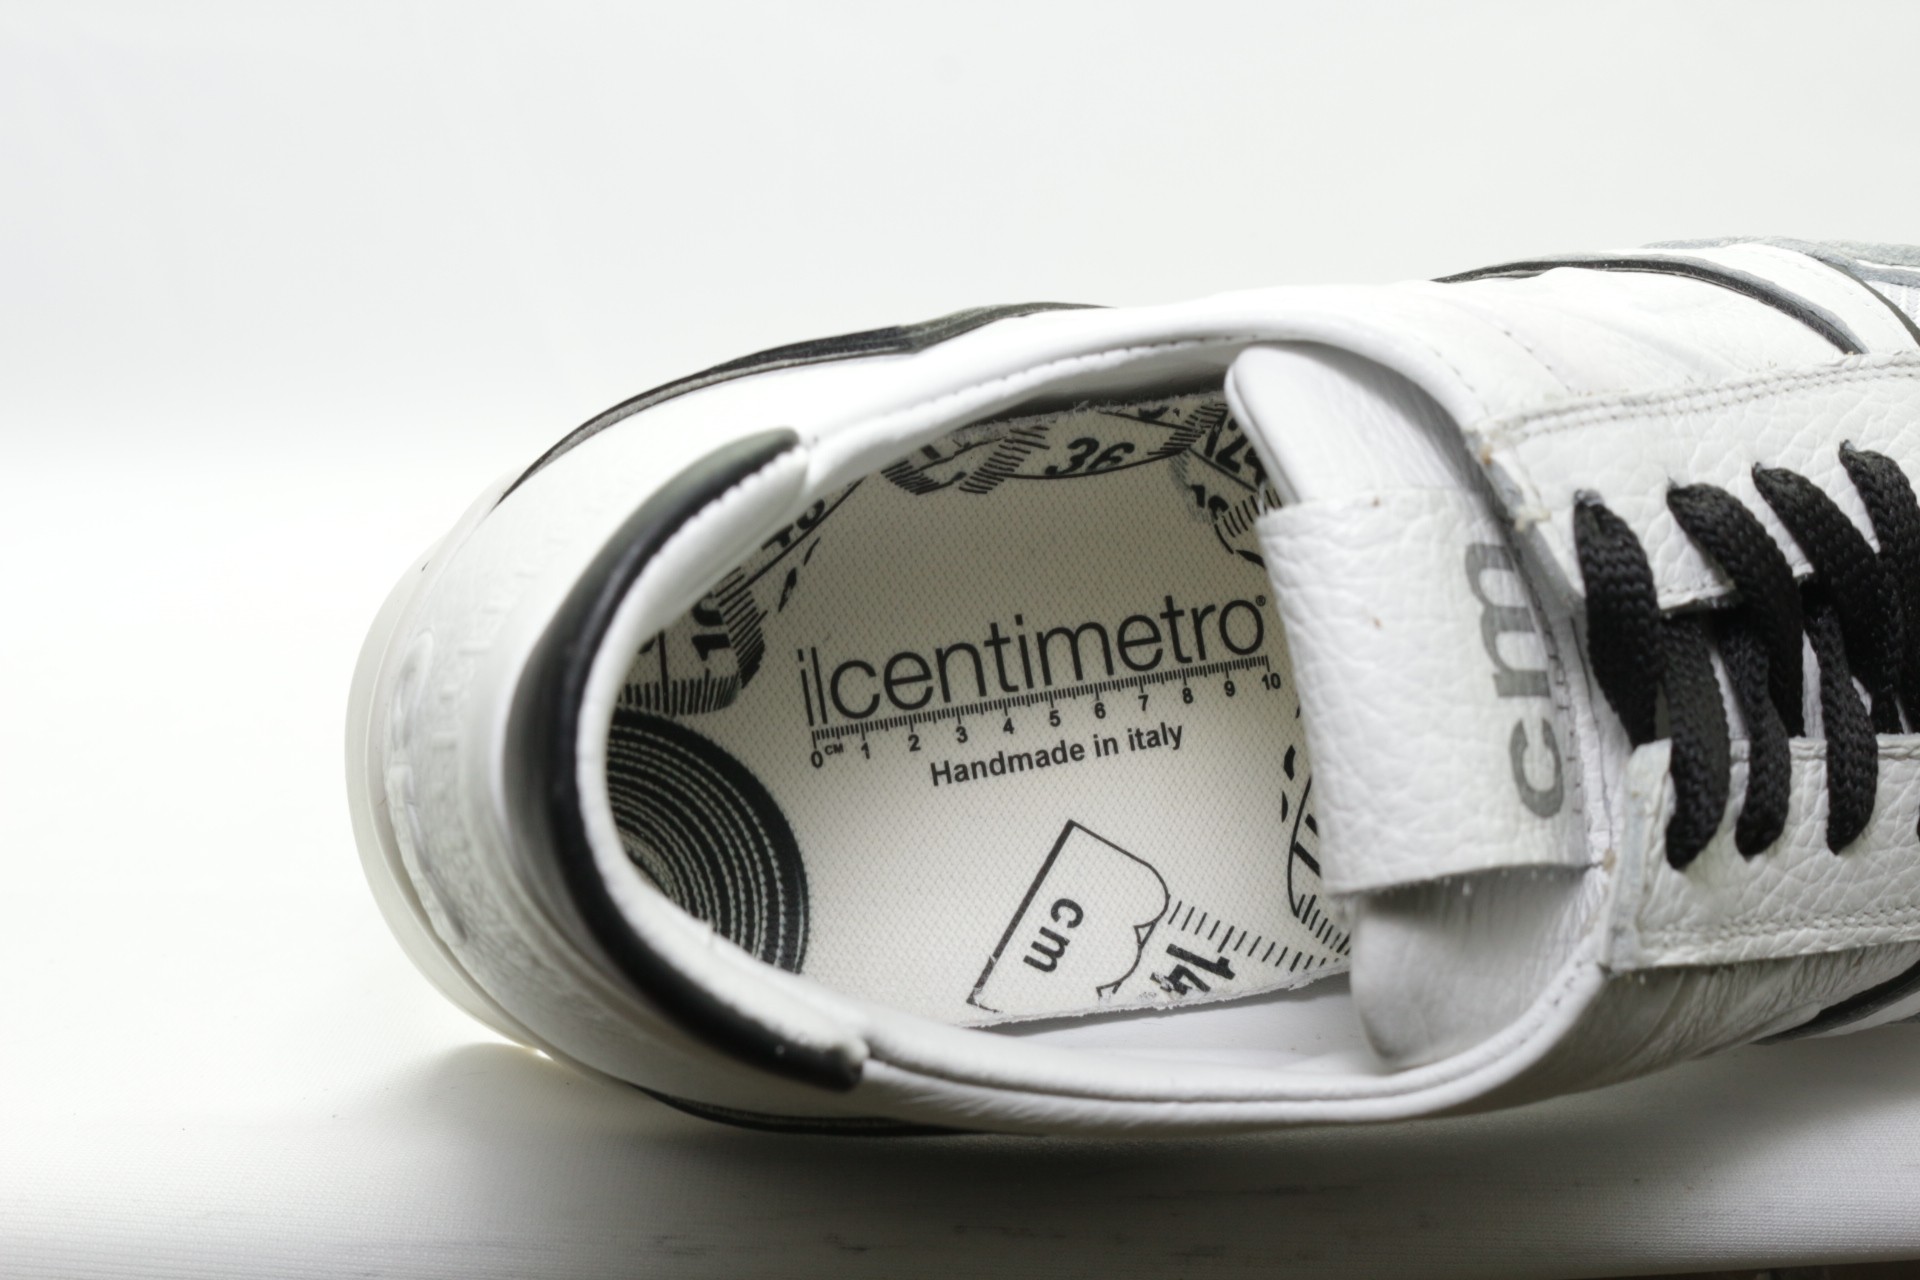 Sneakers dama Il Centimetro din piele -ale82- CM40